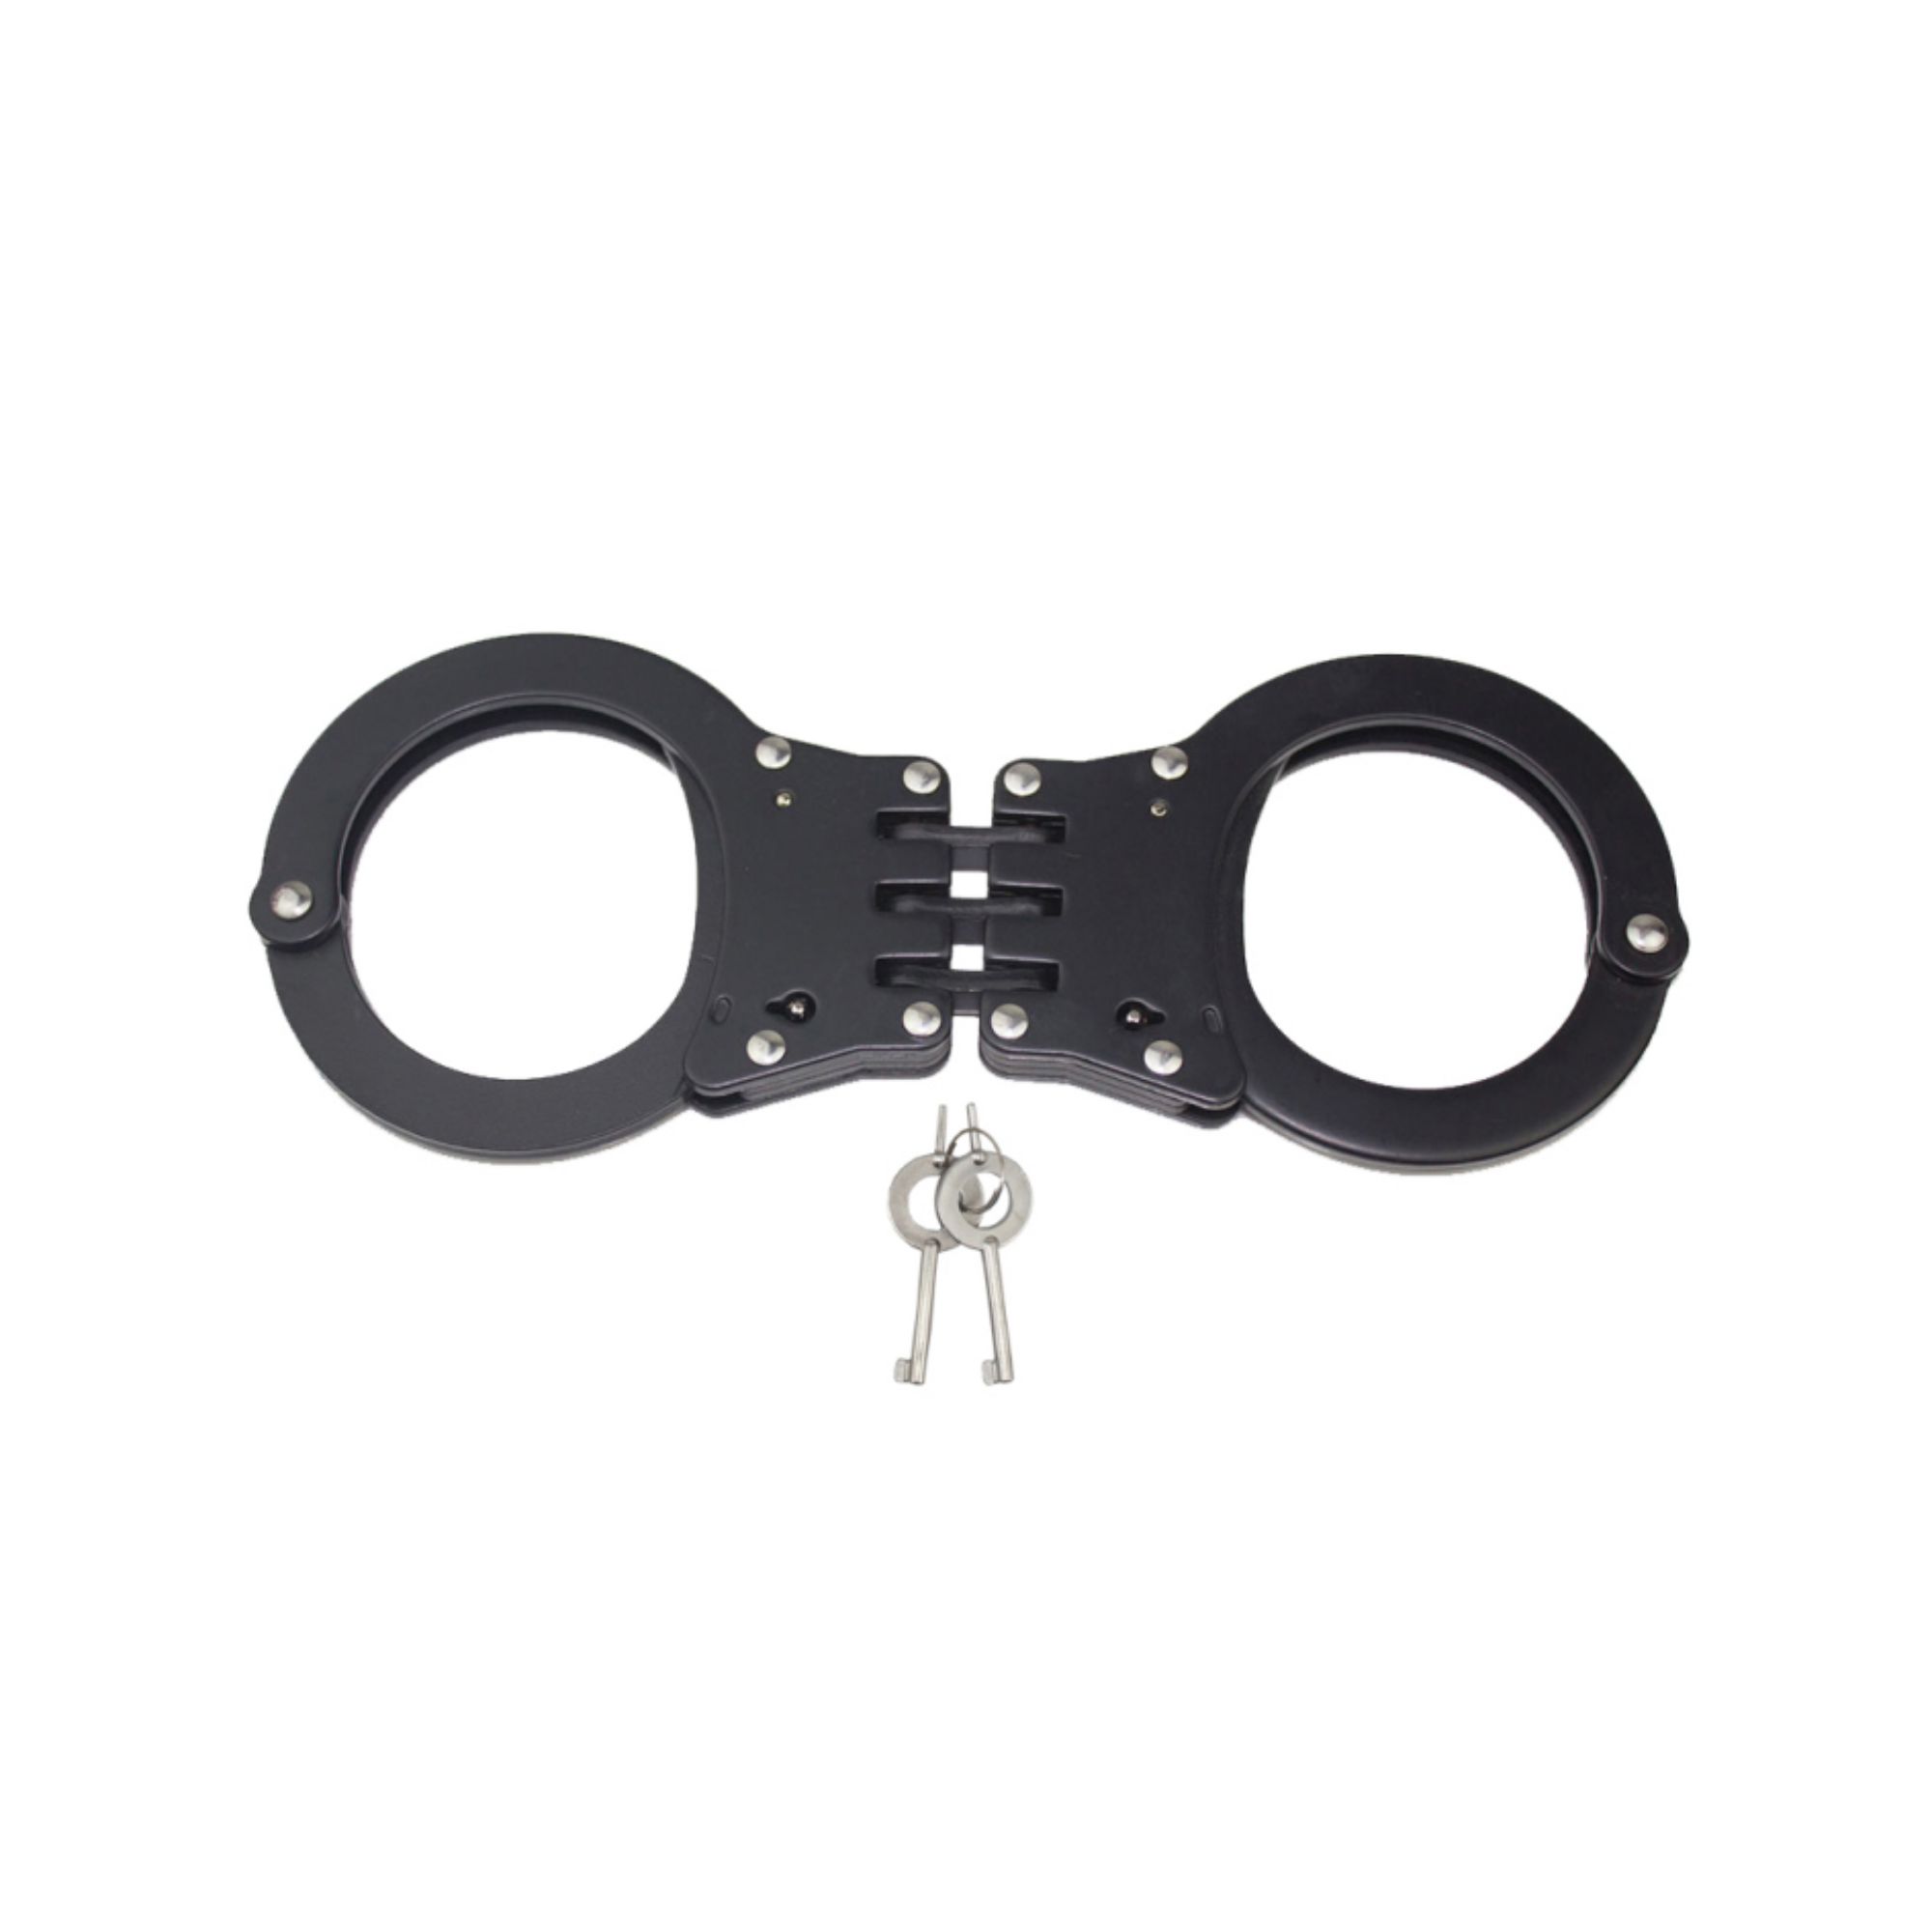 HC-03J hinged handcuffs